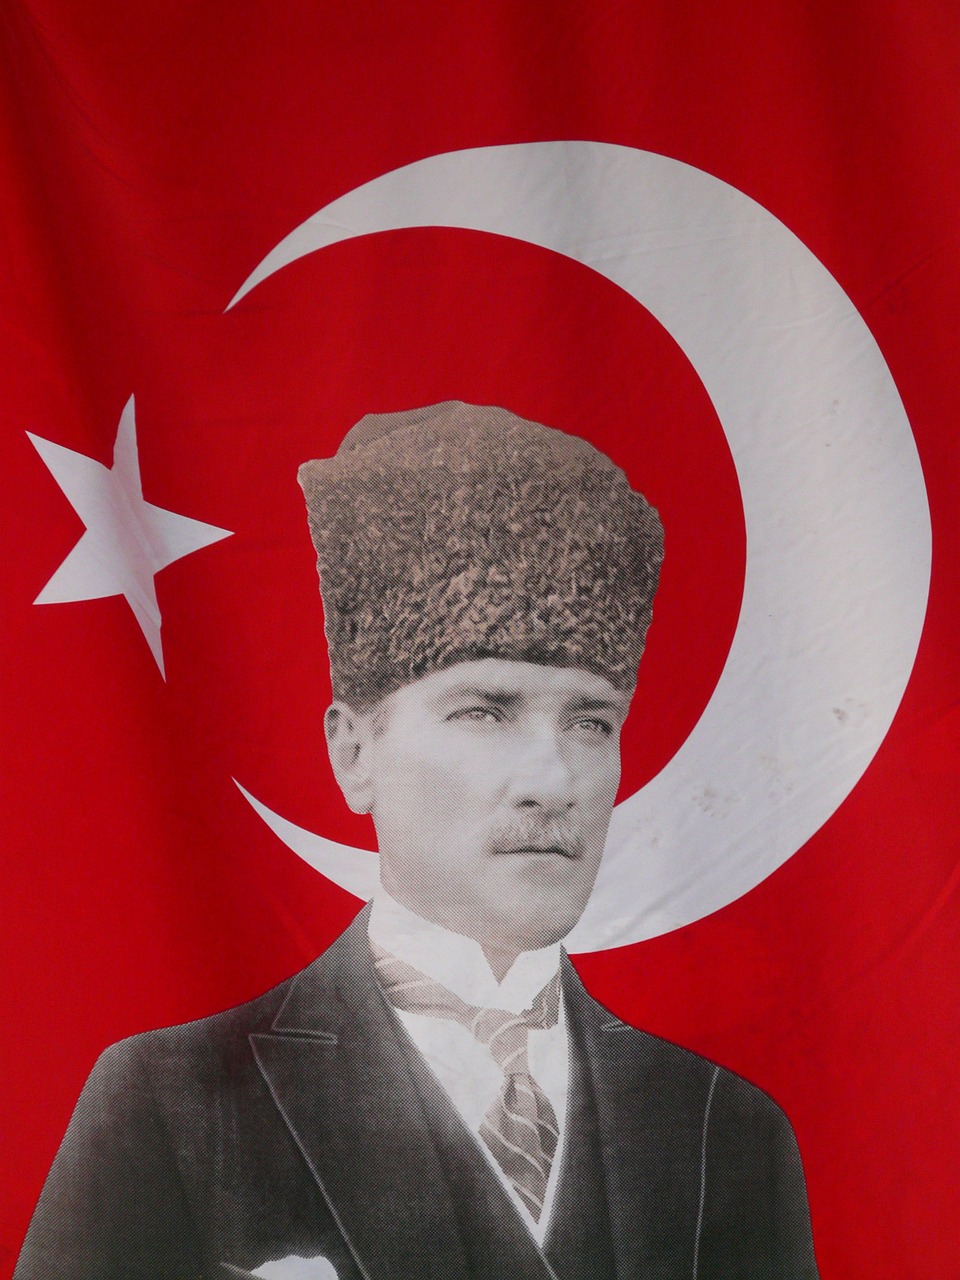 turkey turkish flag flag free photo